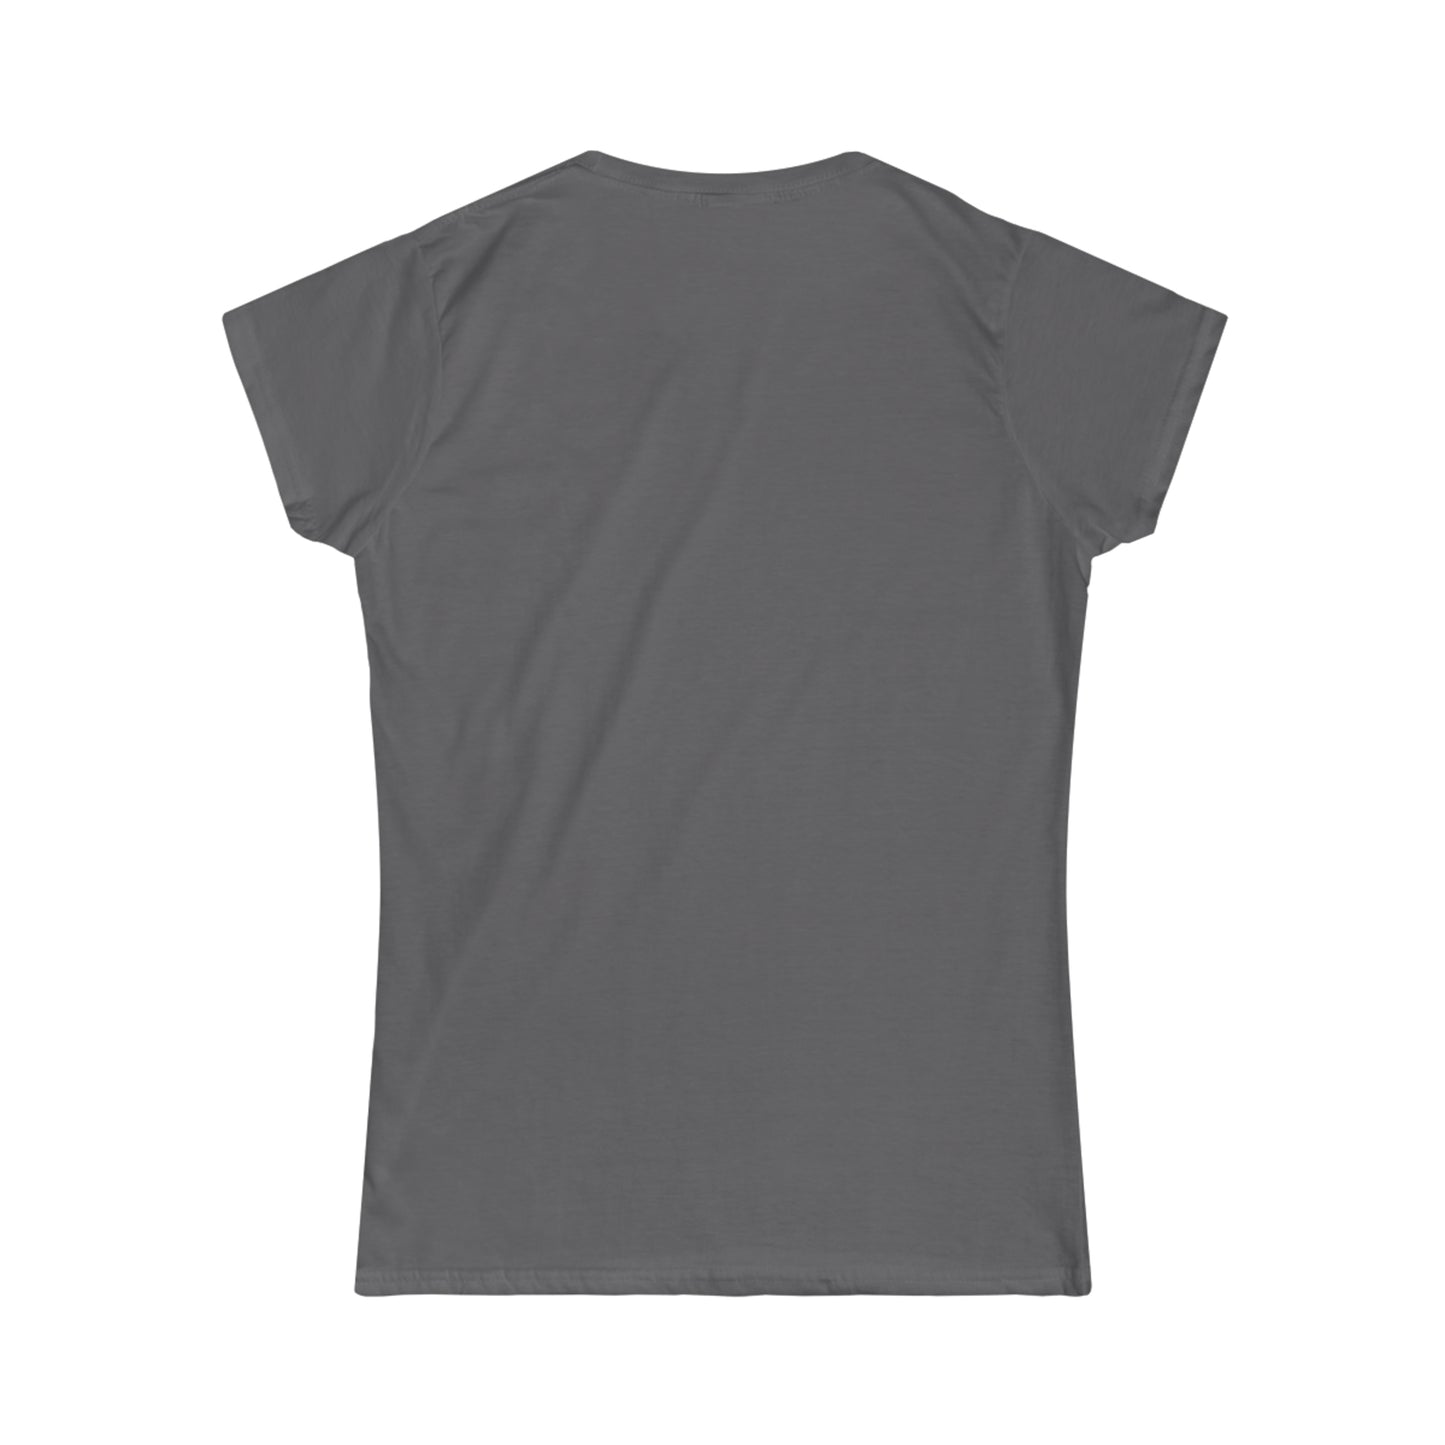 Hoy voy a liarla Parda! - Camiseta de Mujer / Women's Softstyle Tee